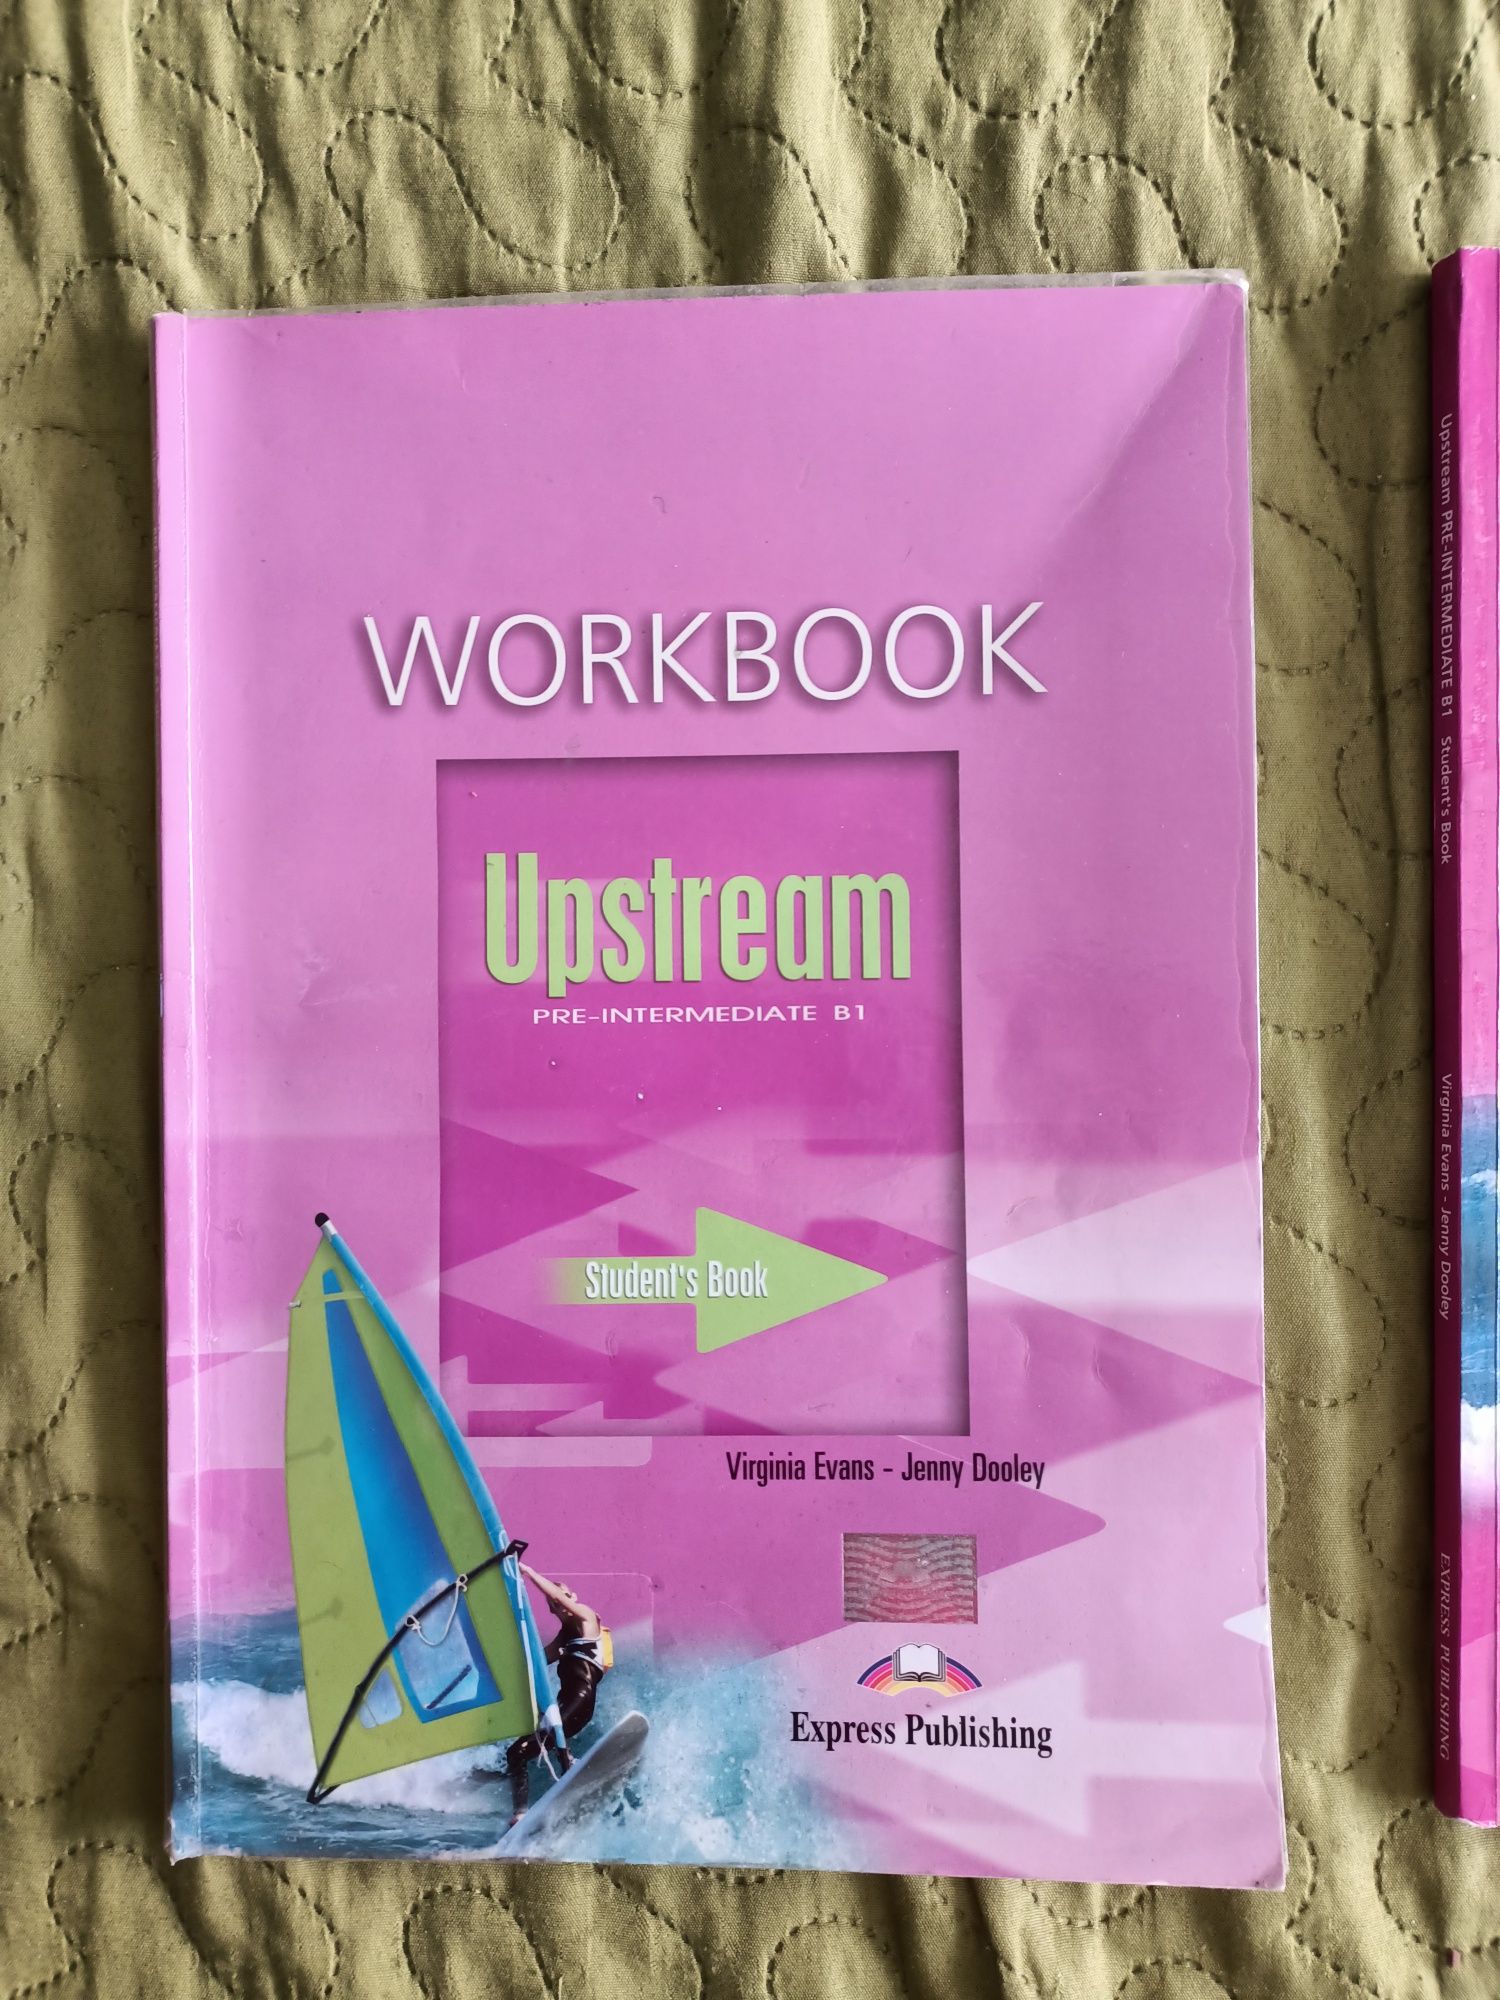 Upstream Pre-Intermediate B1 workbook student's book
Workbook
Virginia